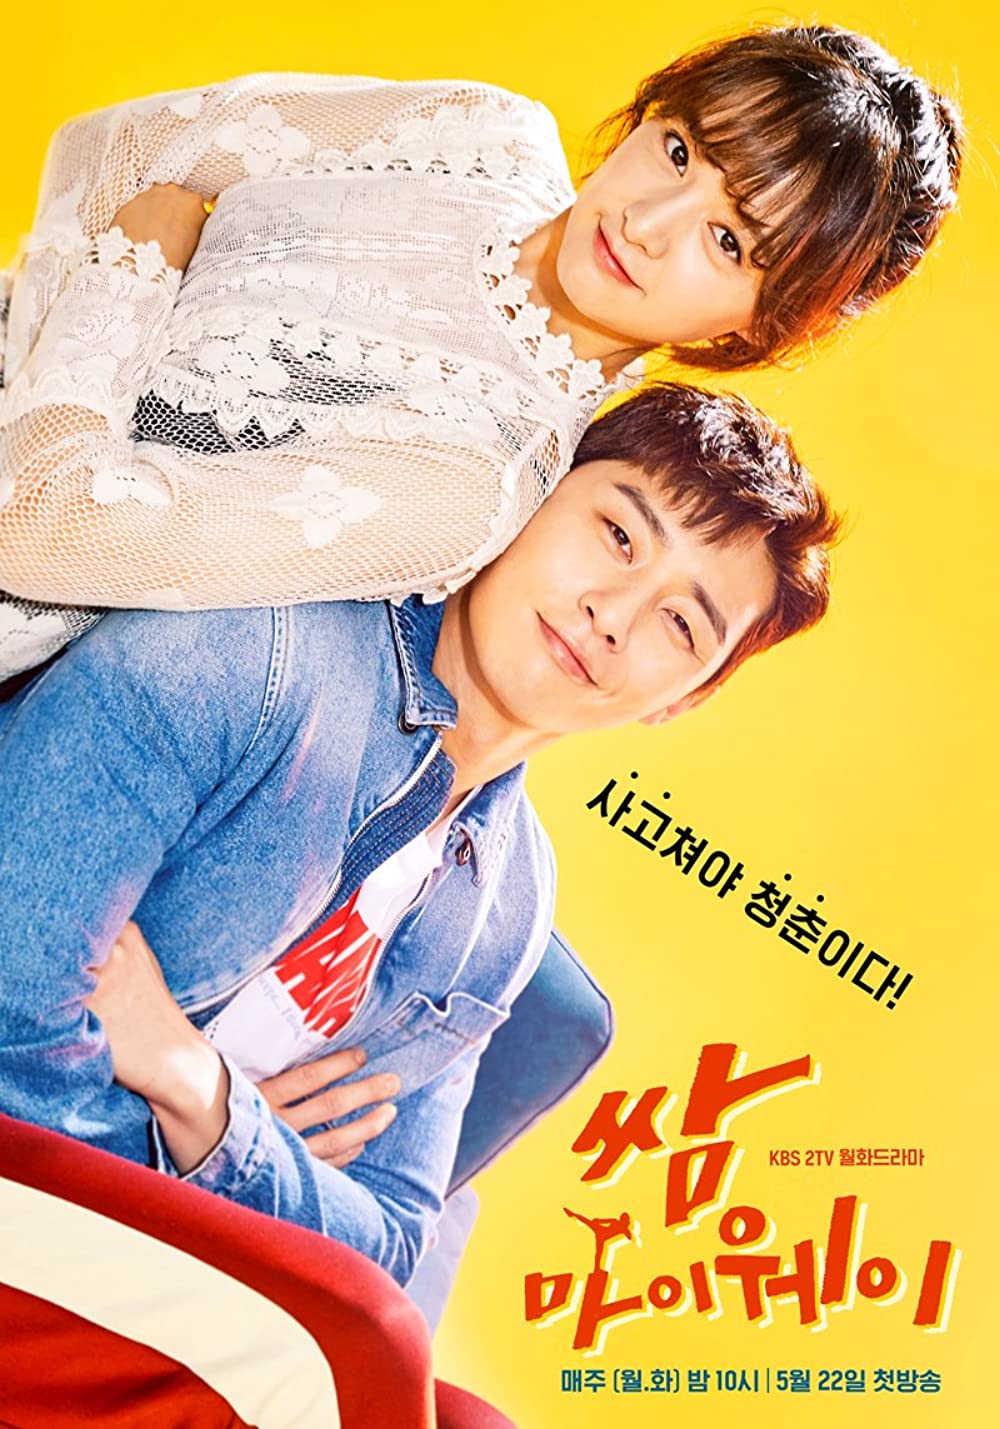 9 Drama Korea dibintangi Kim Ji-won, The Heirs dongkrak popularitasnya